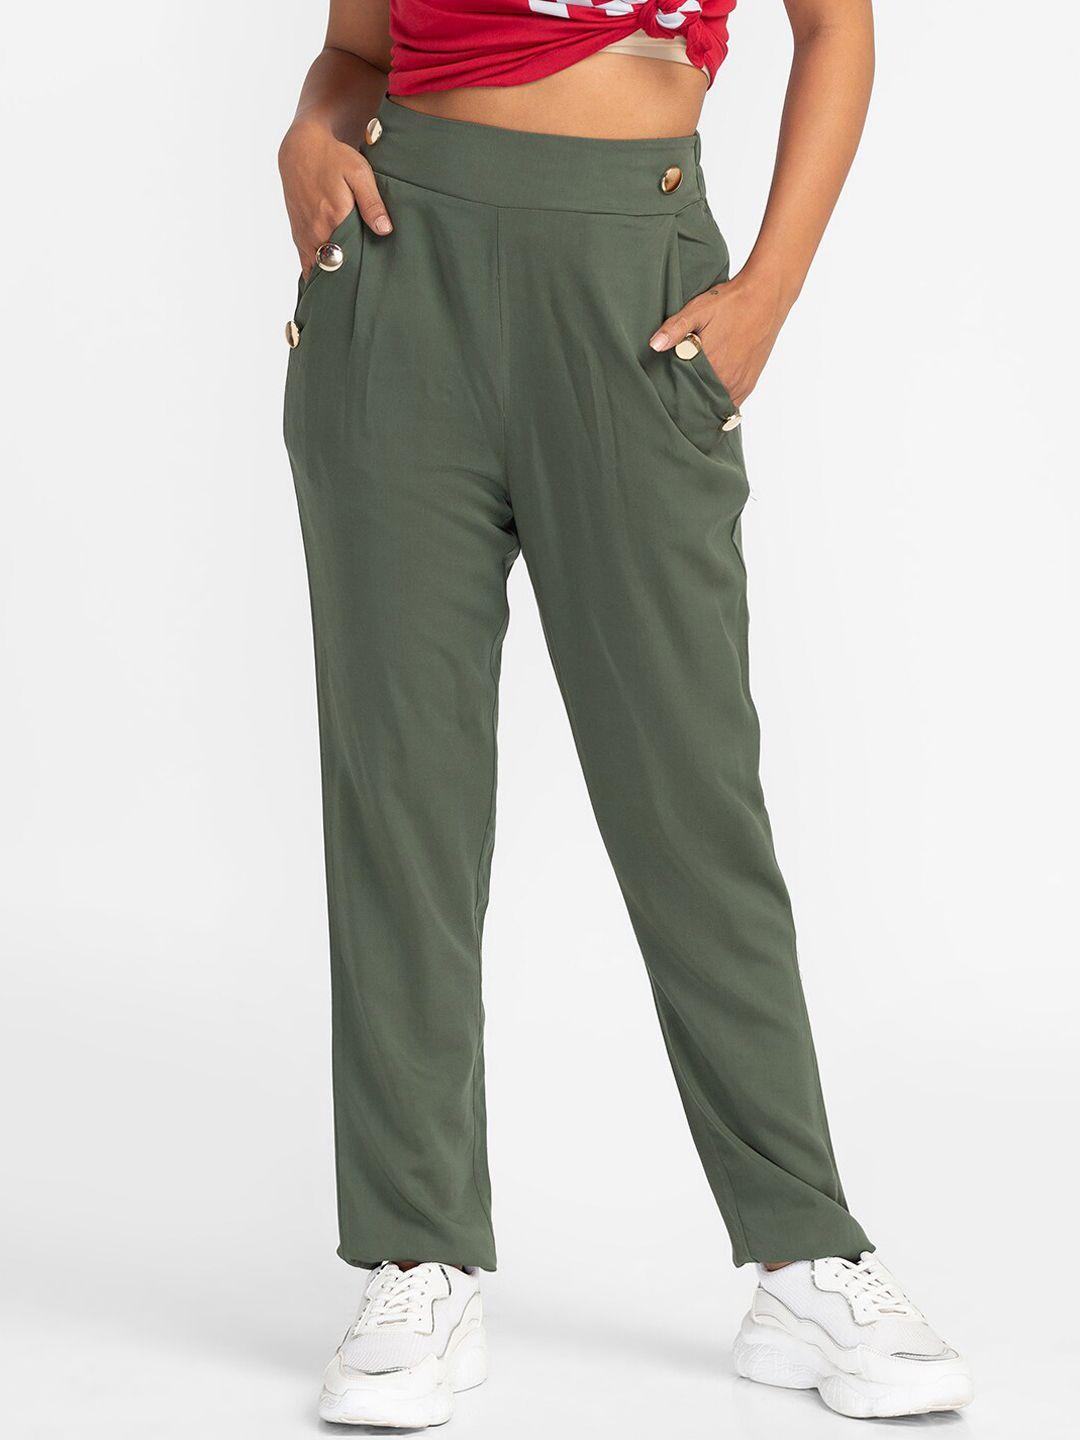 globus-women-olive-green-slim-fit-regular-trousers